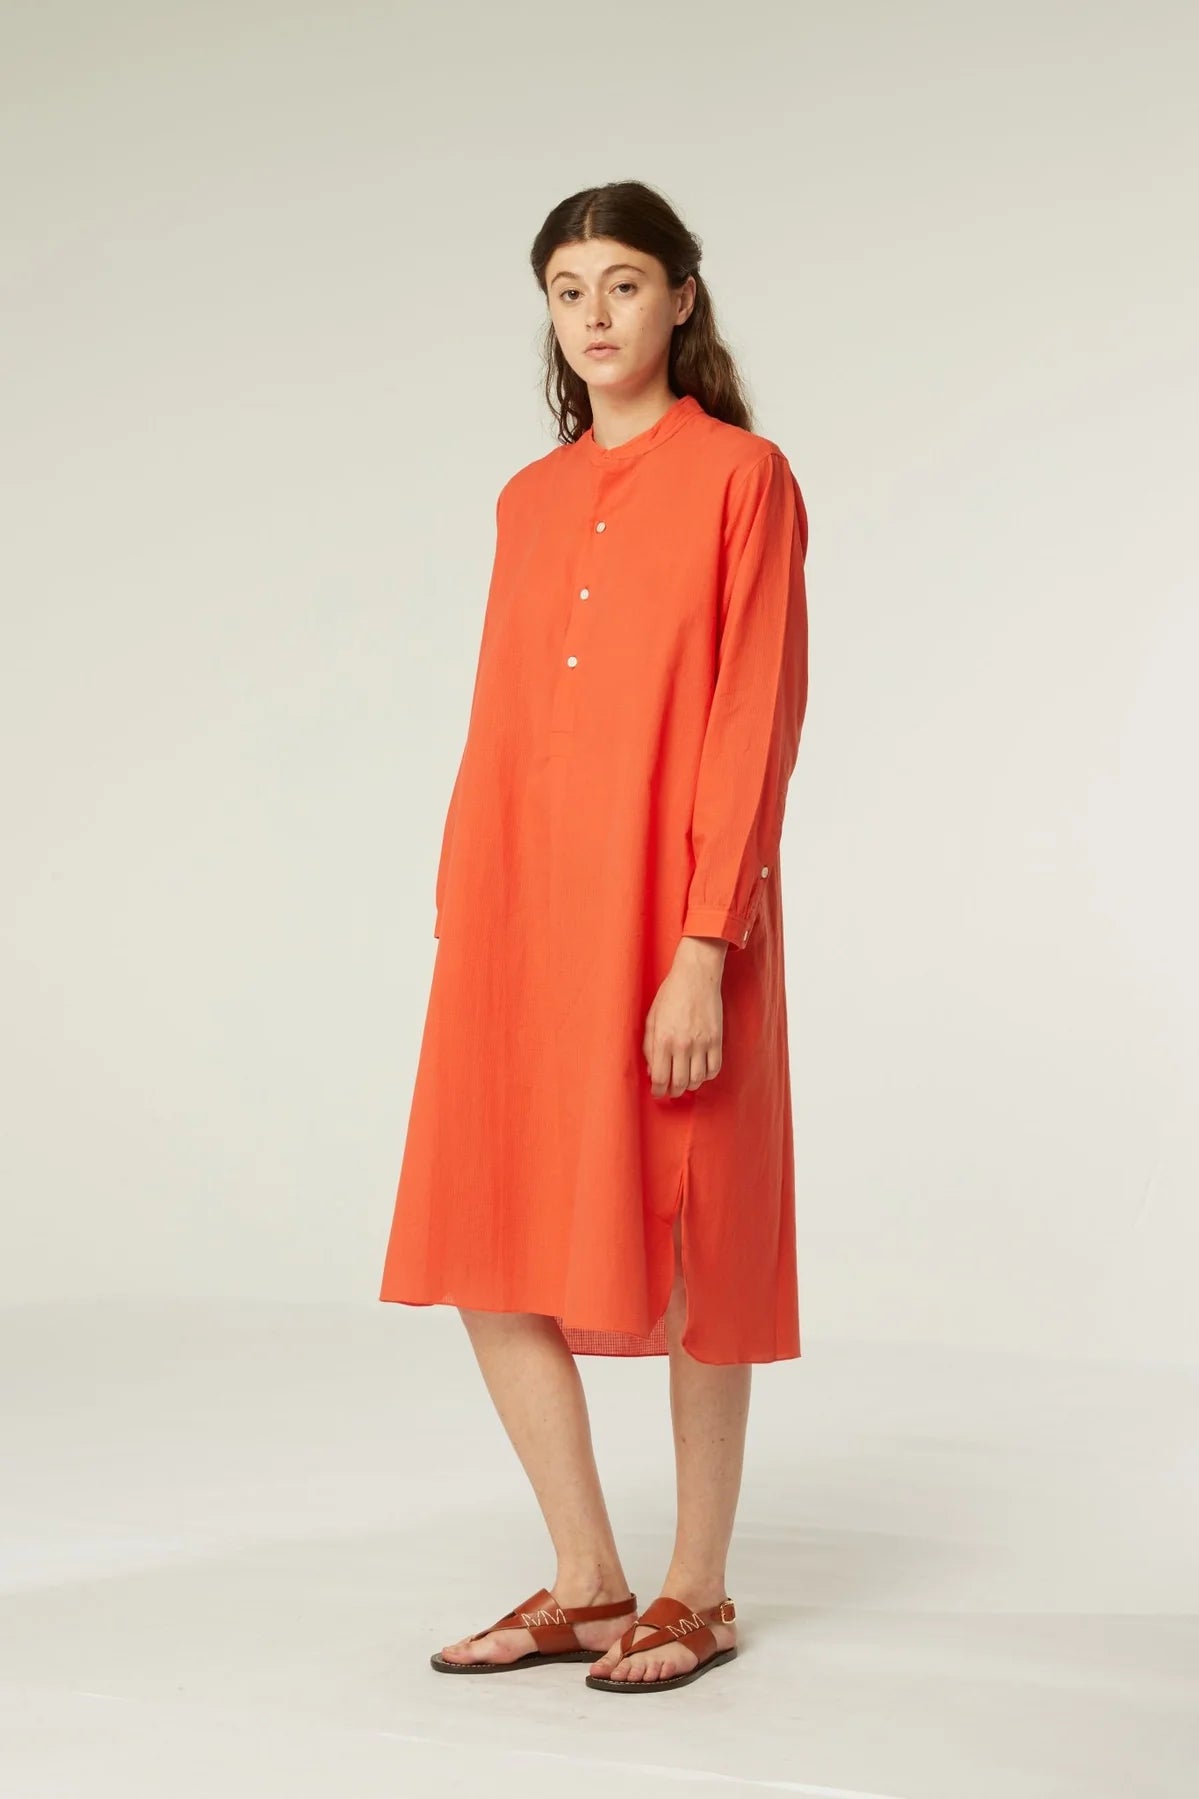 Moismont Dress Chloe Colorama Poppy Red - Size 10/12